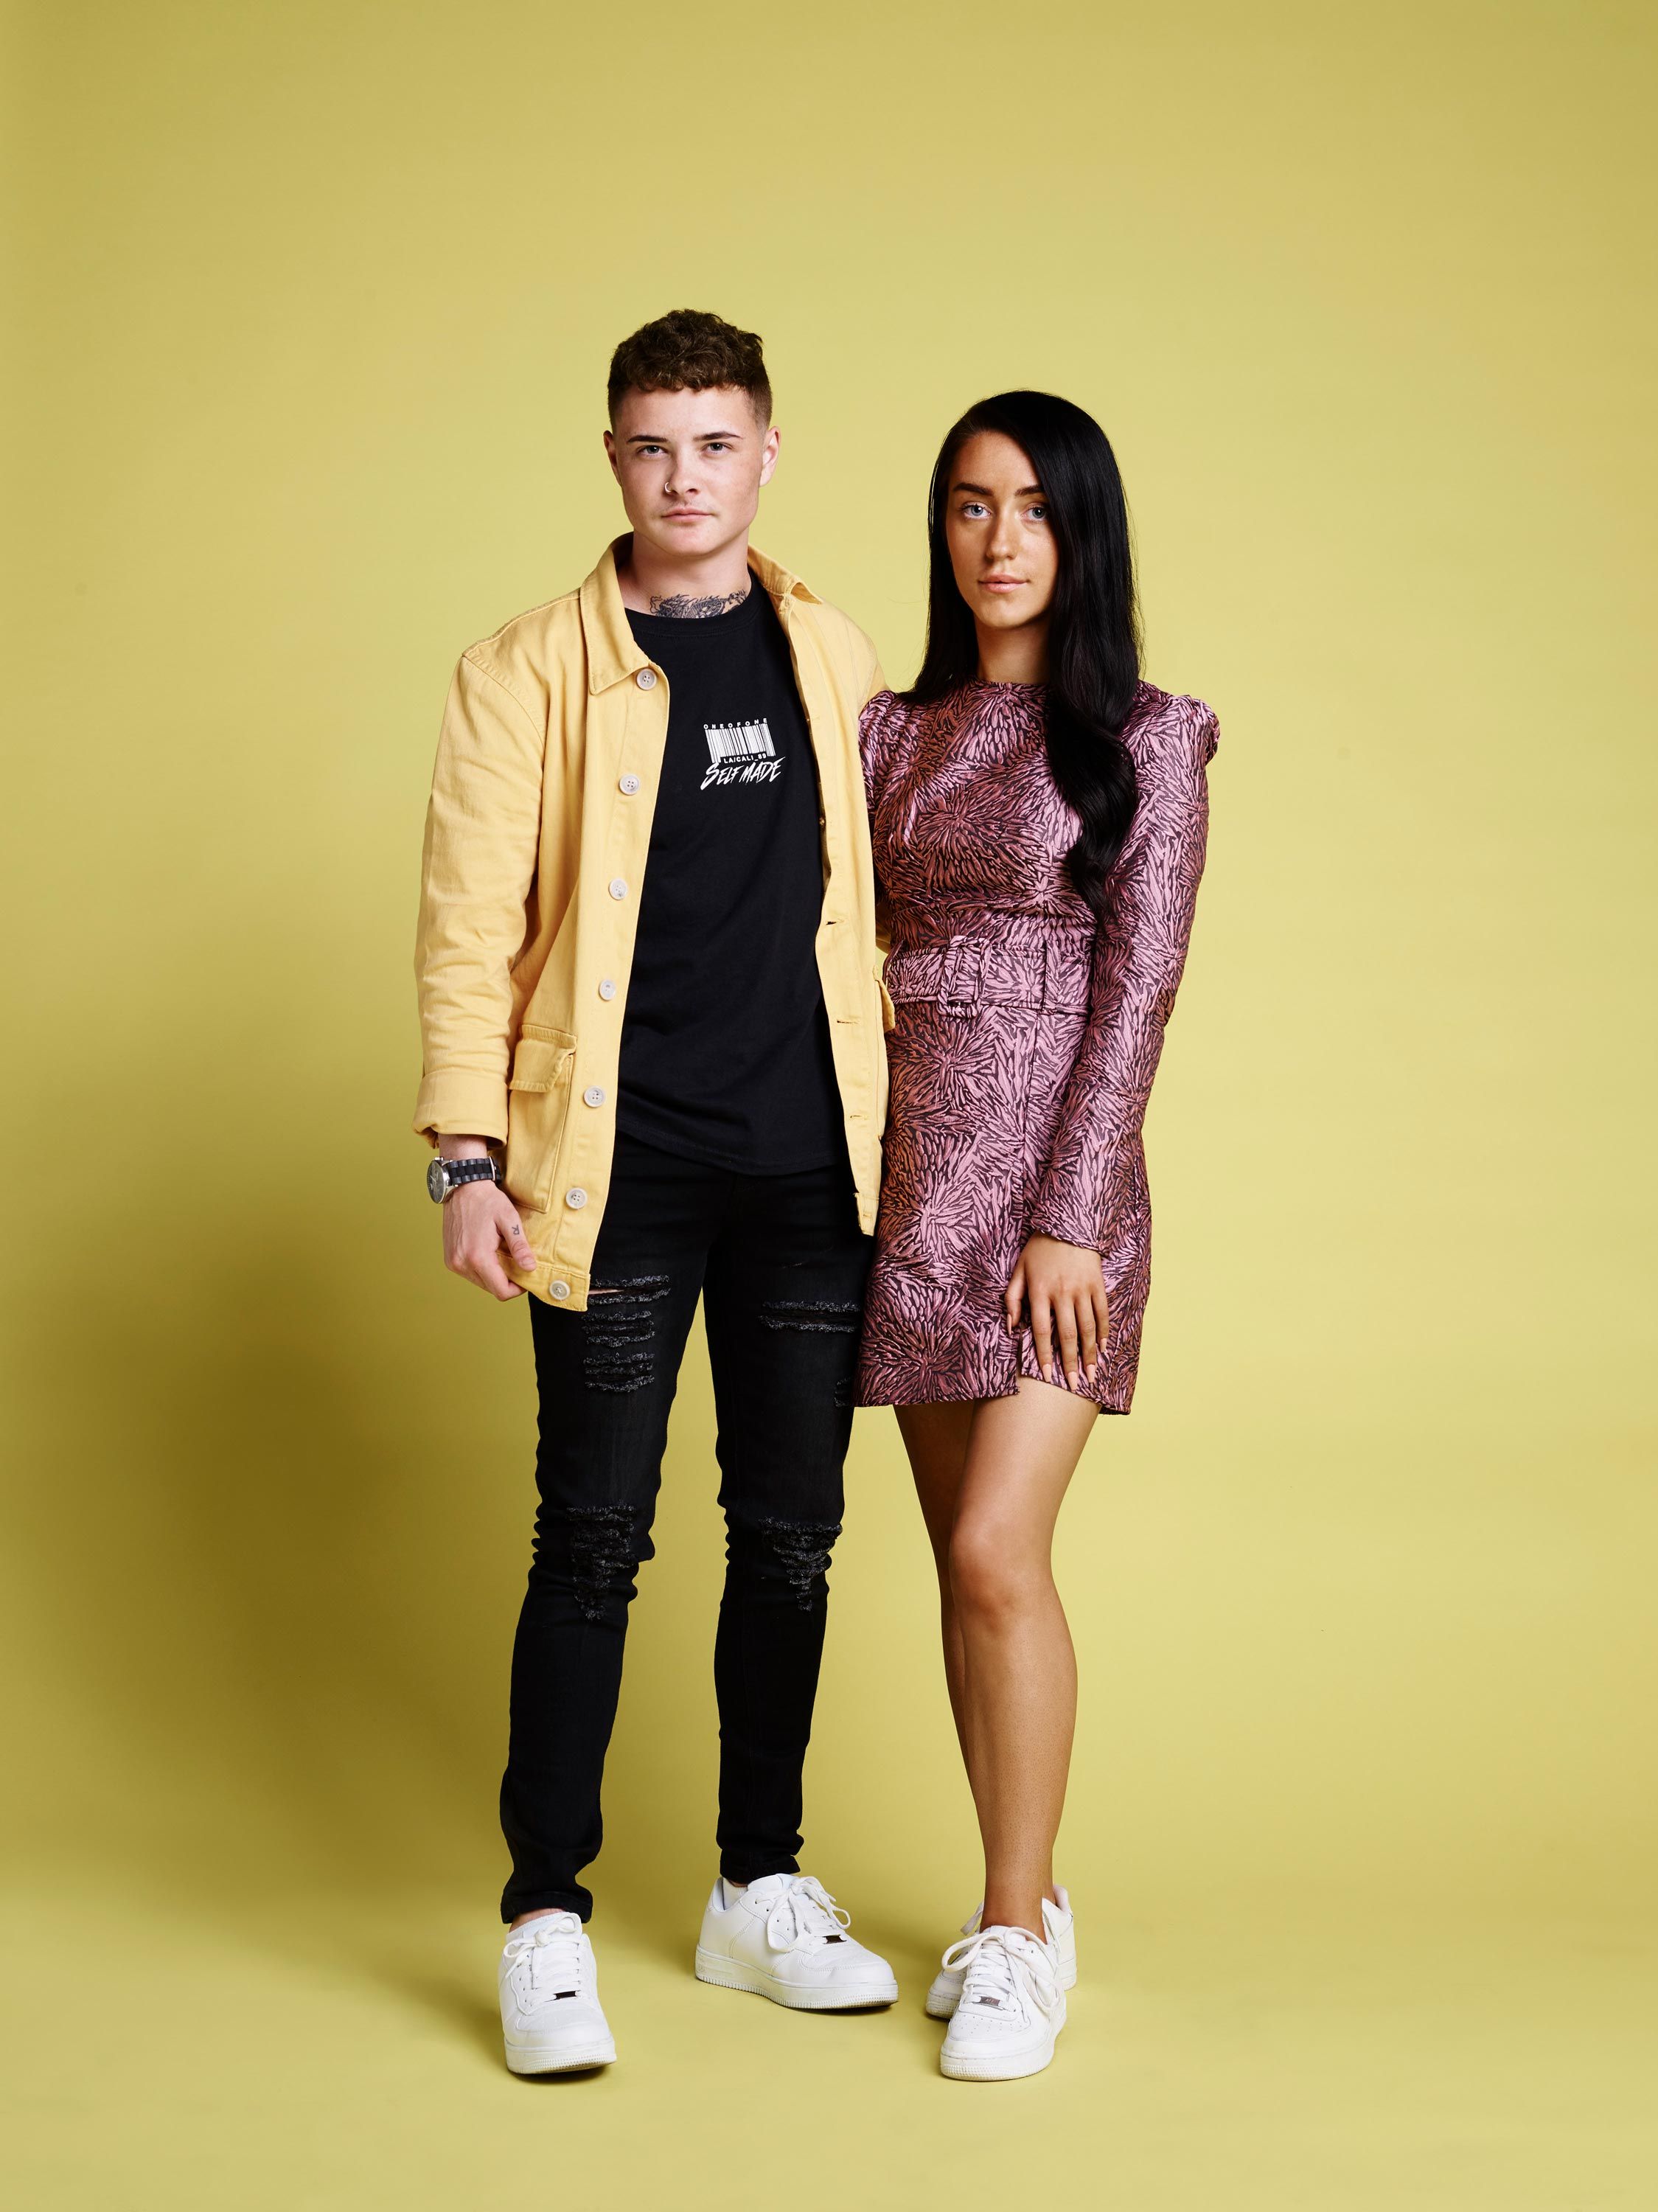 MTV's True Love or True Lies 2019 - Meet the contestants